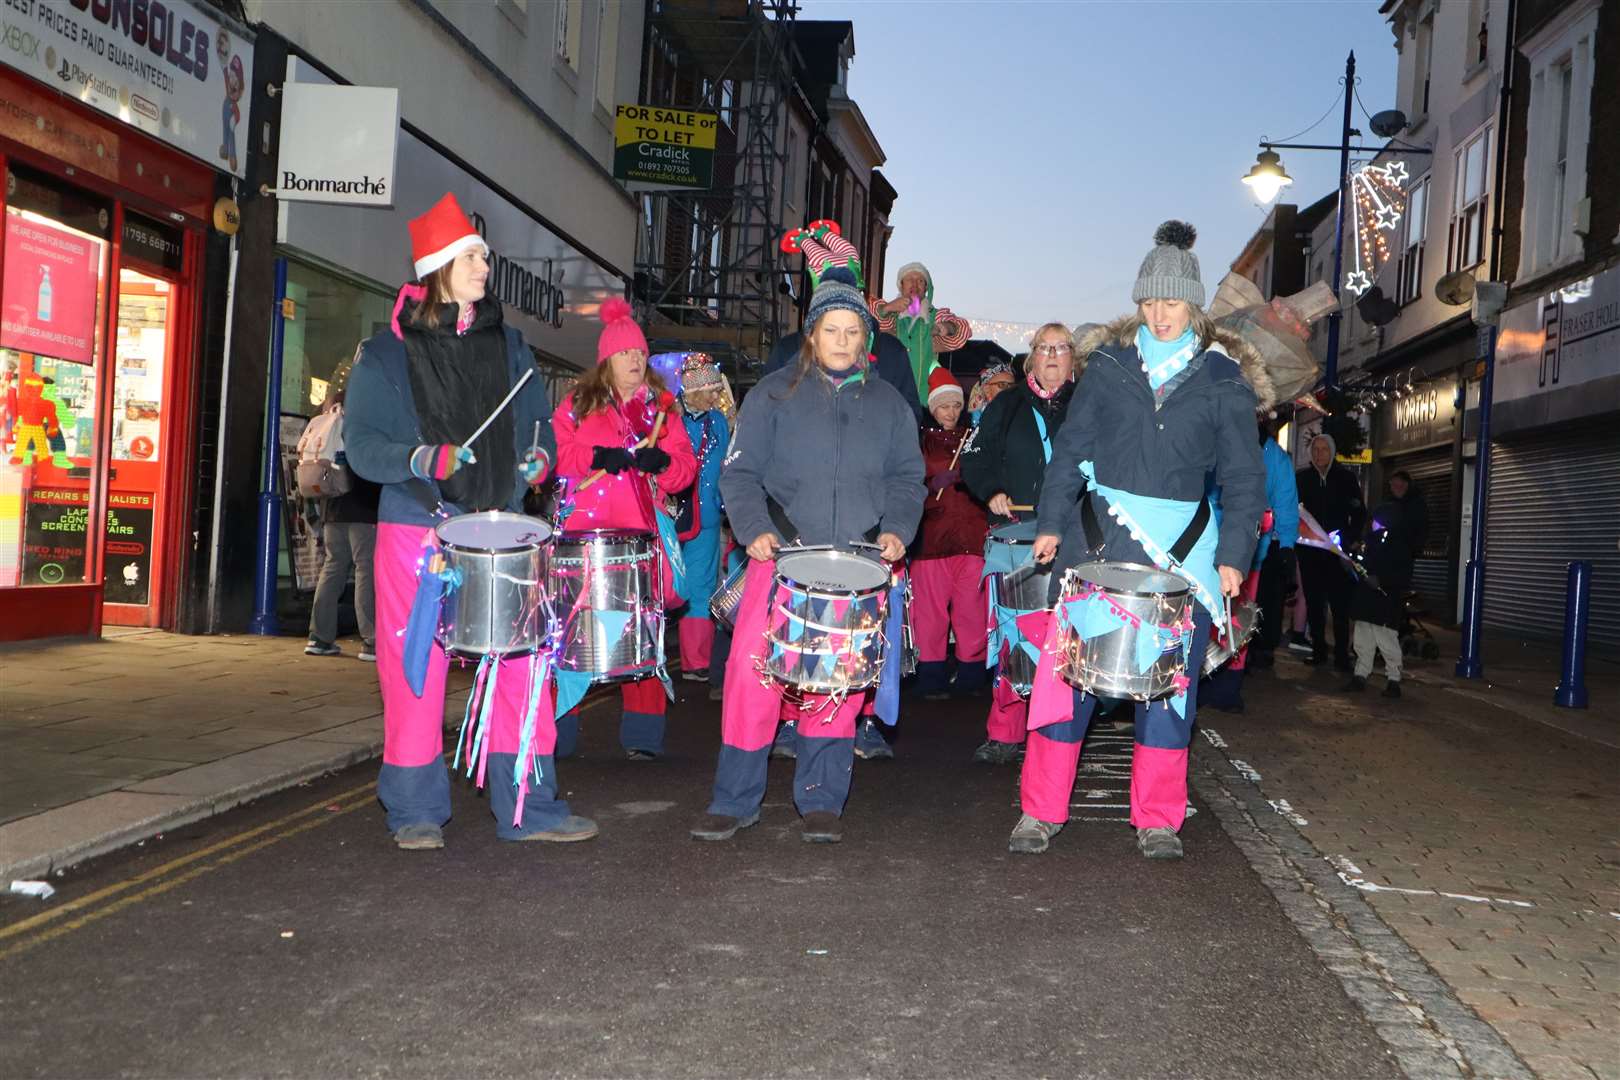 Whitstable samba band Pelo Mar led the lantern parade through Sheerness High Street on Saturday